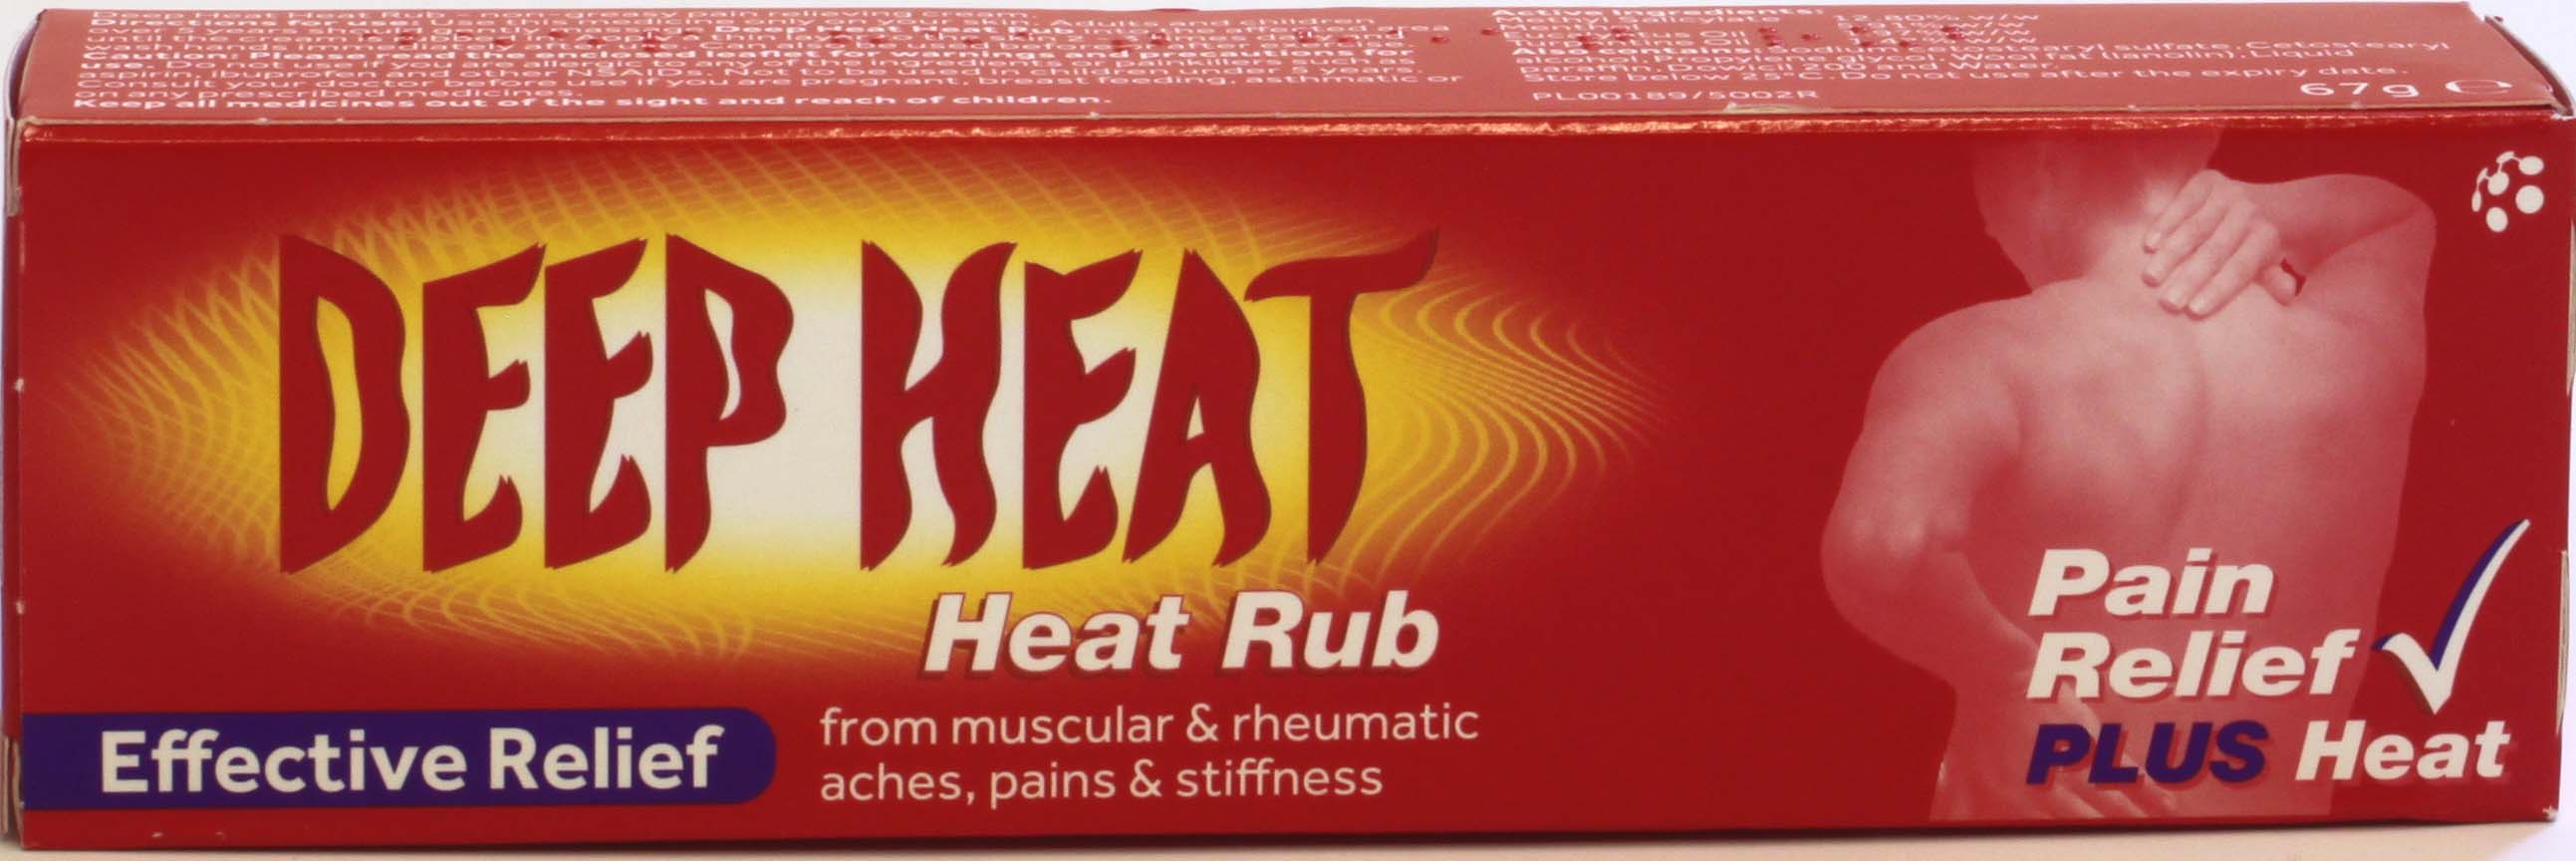 Deep Heat Heat  Rub - 35g